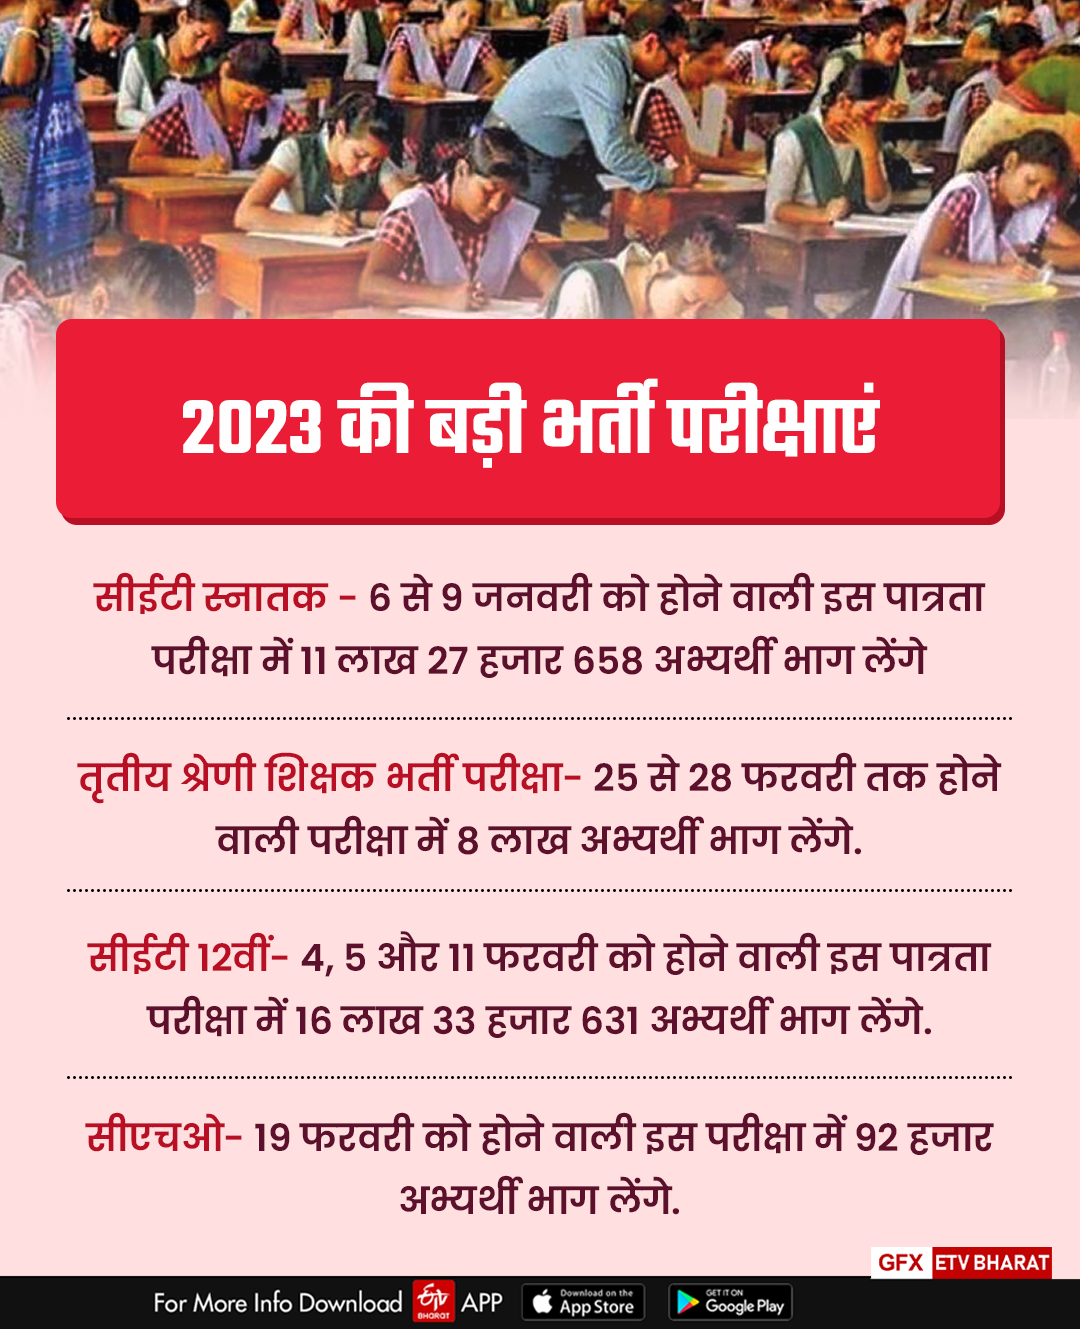 Rajasthan Year Ender 2022